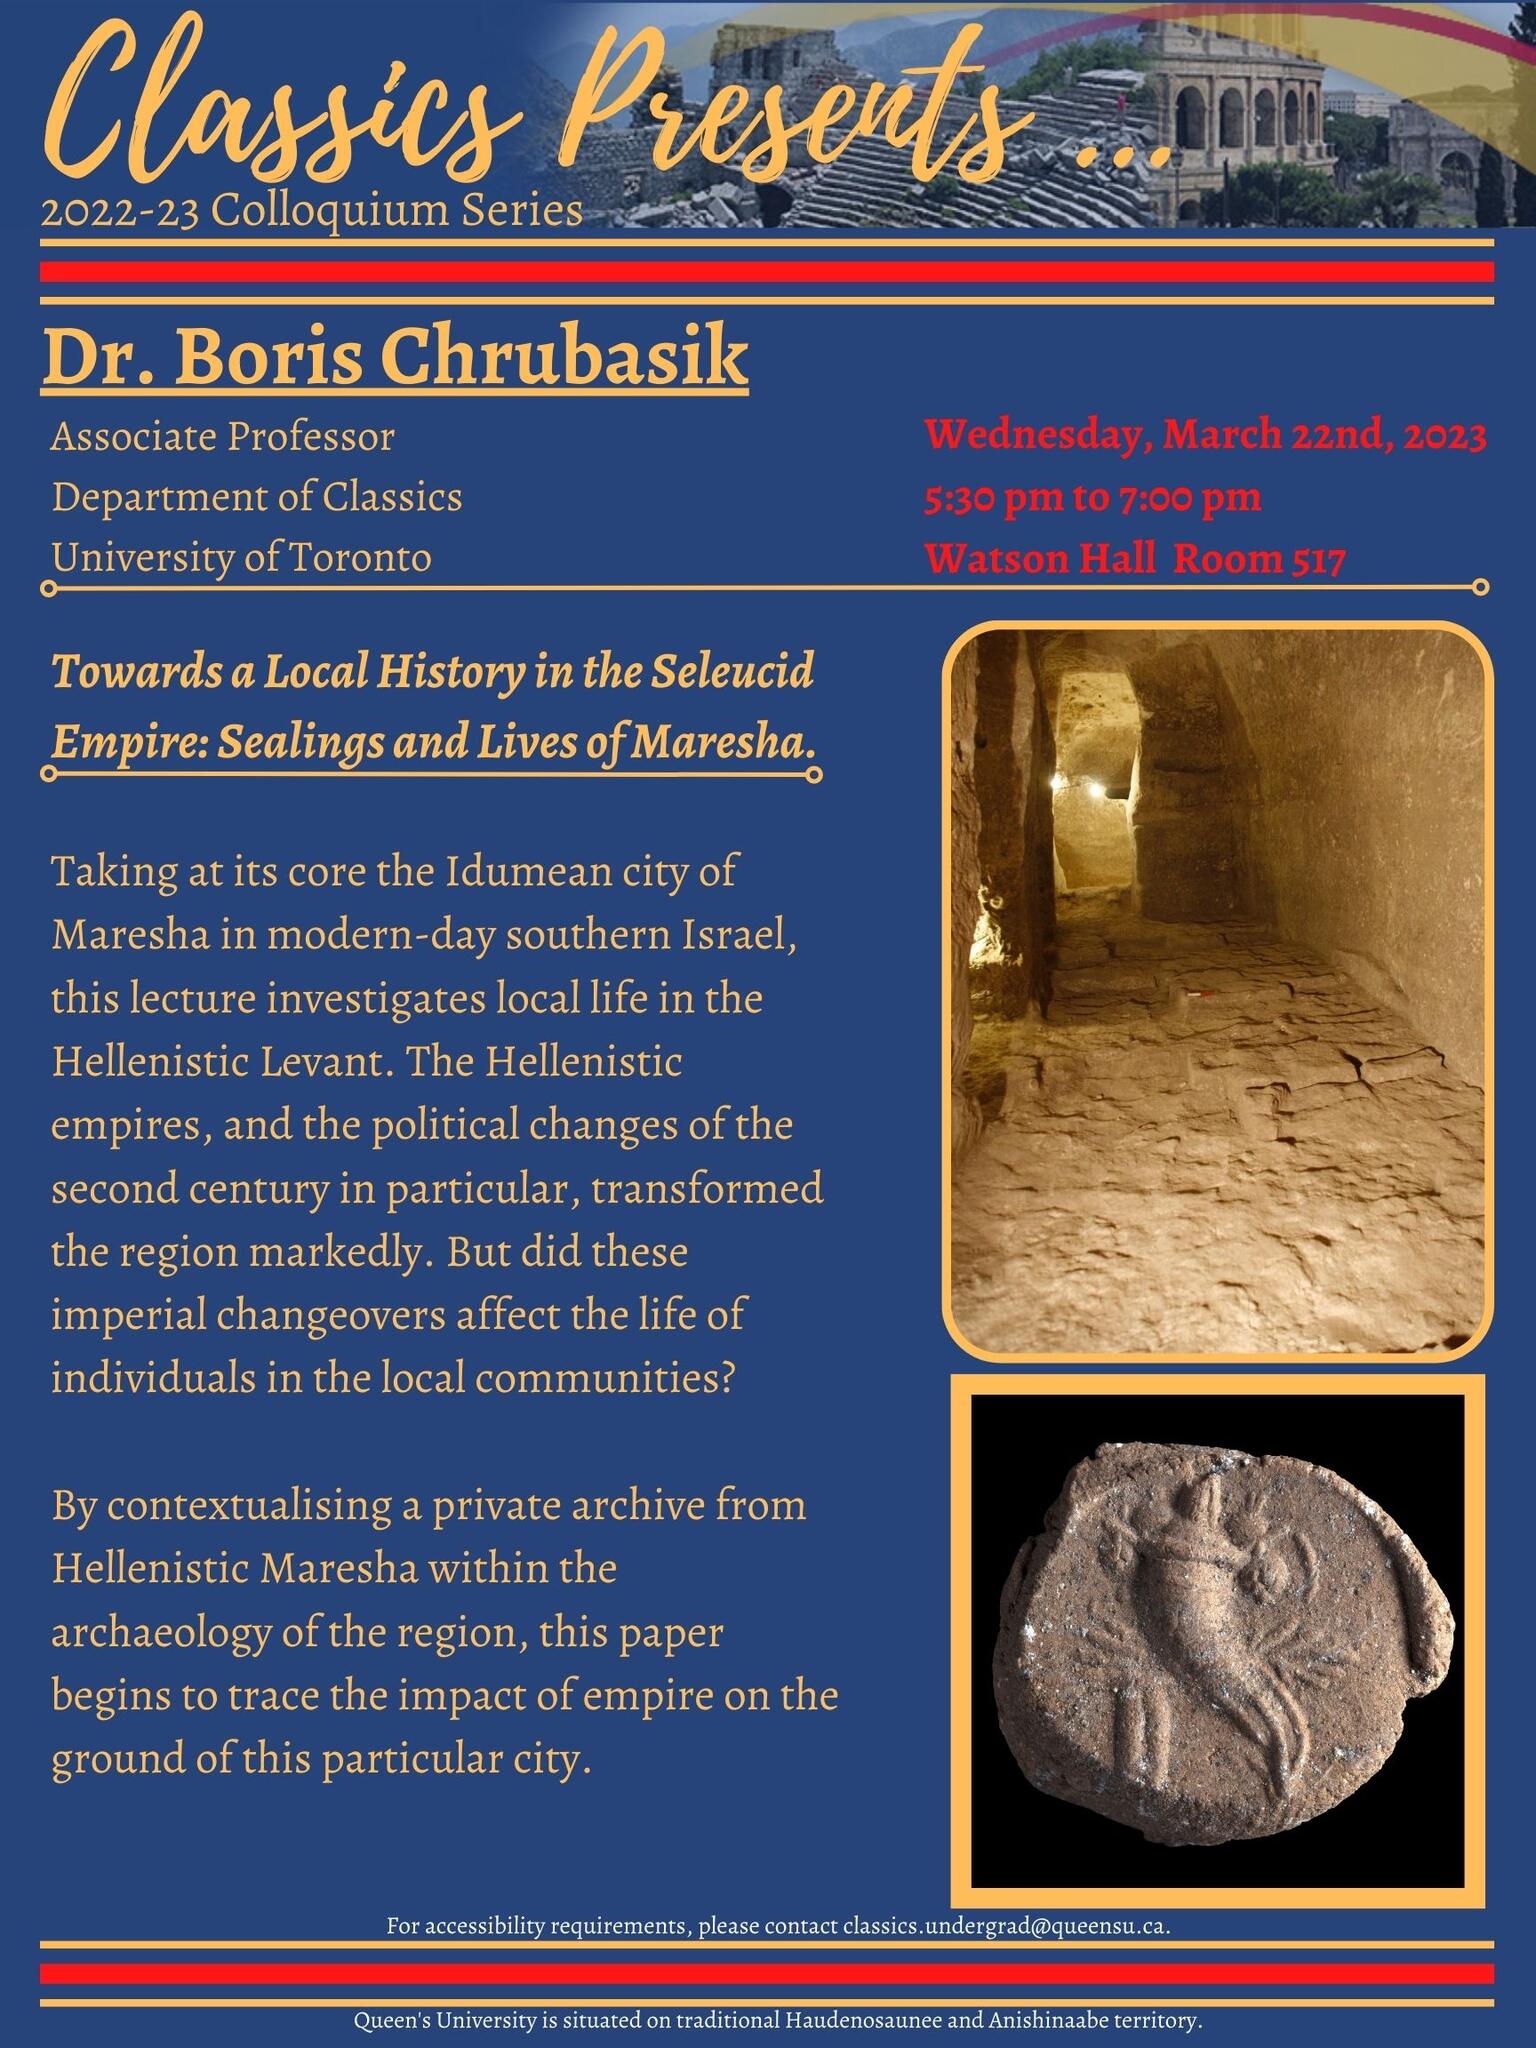 Classics Presents Dr. Brois Chrubasik